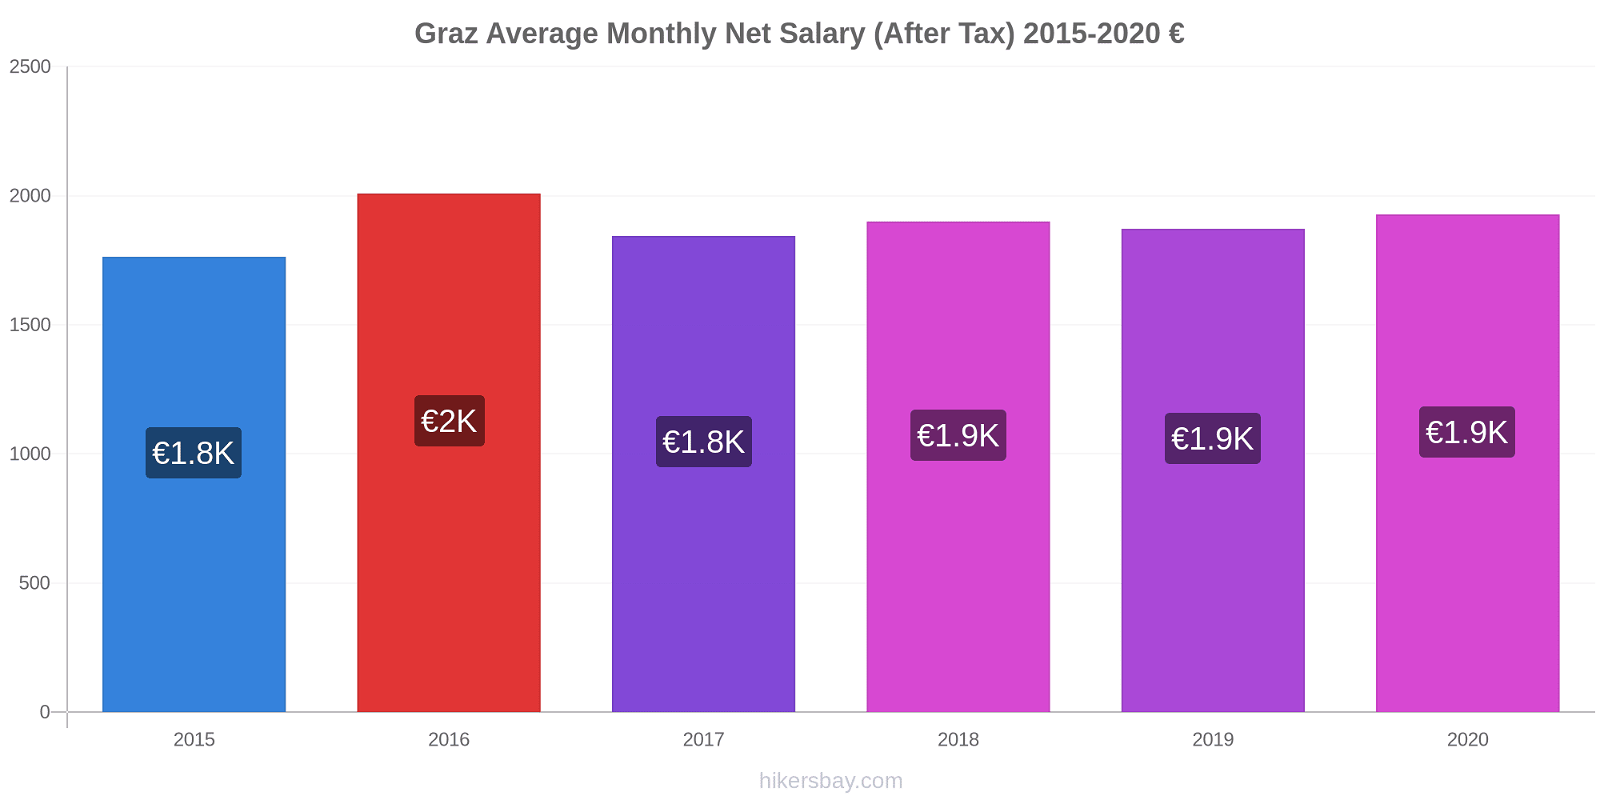 Graz price changes Average Monthly Net Salary (After Tax) hikersbay.com